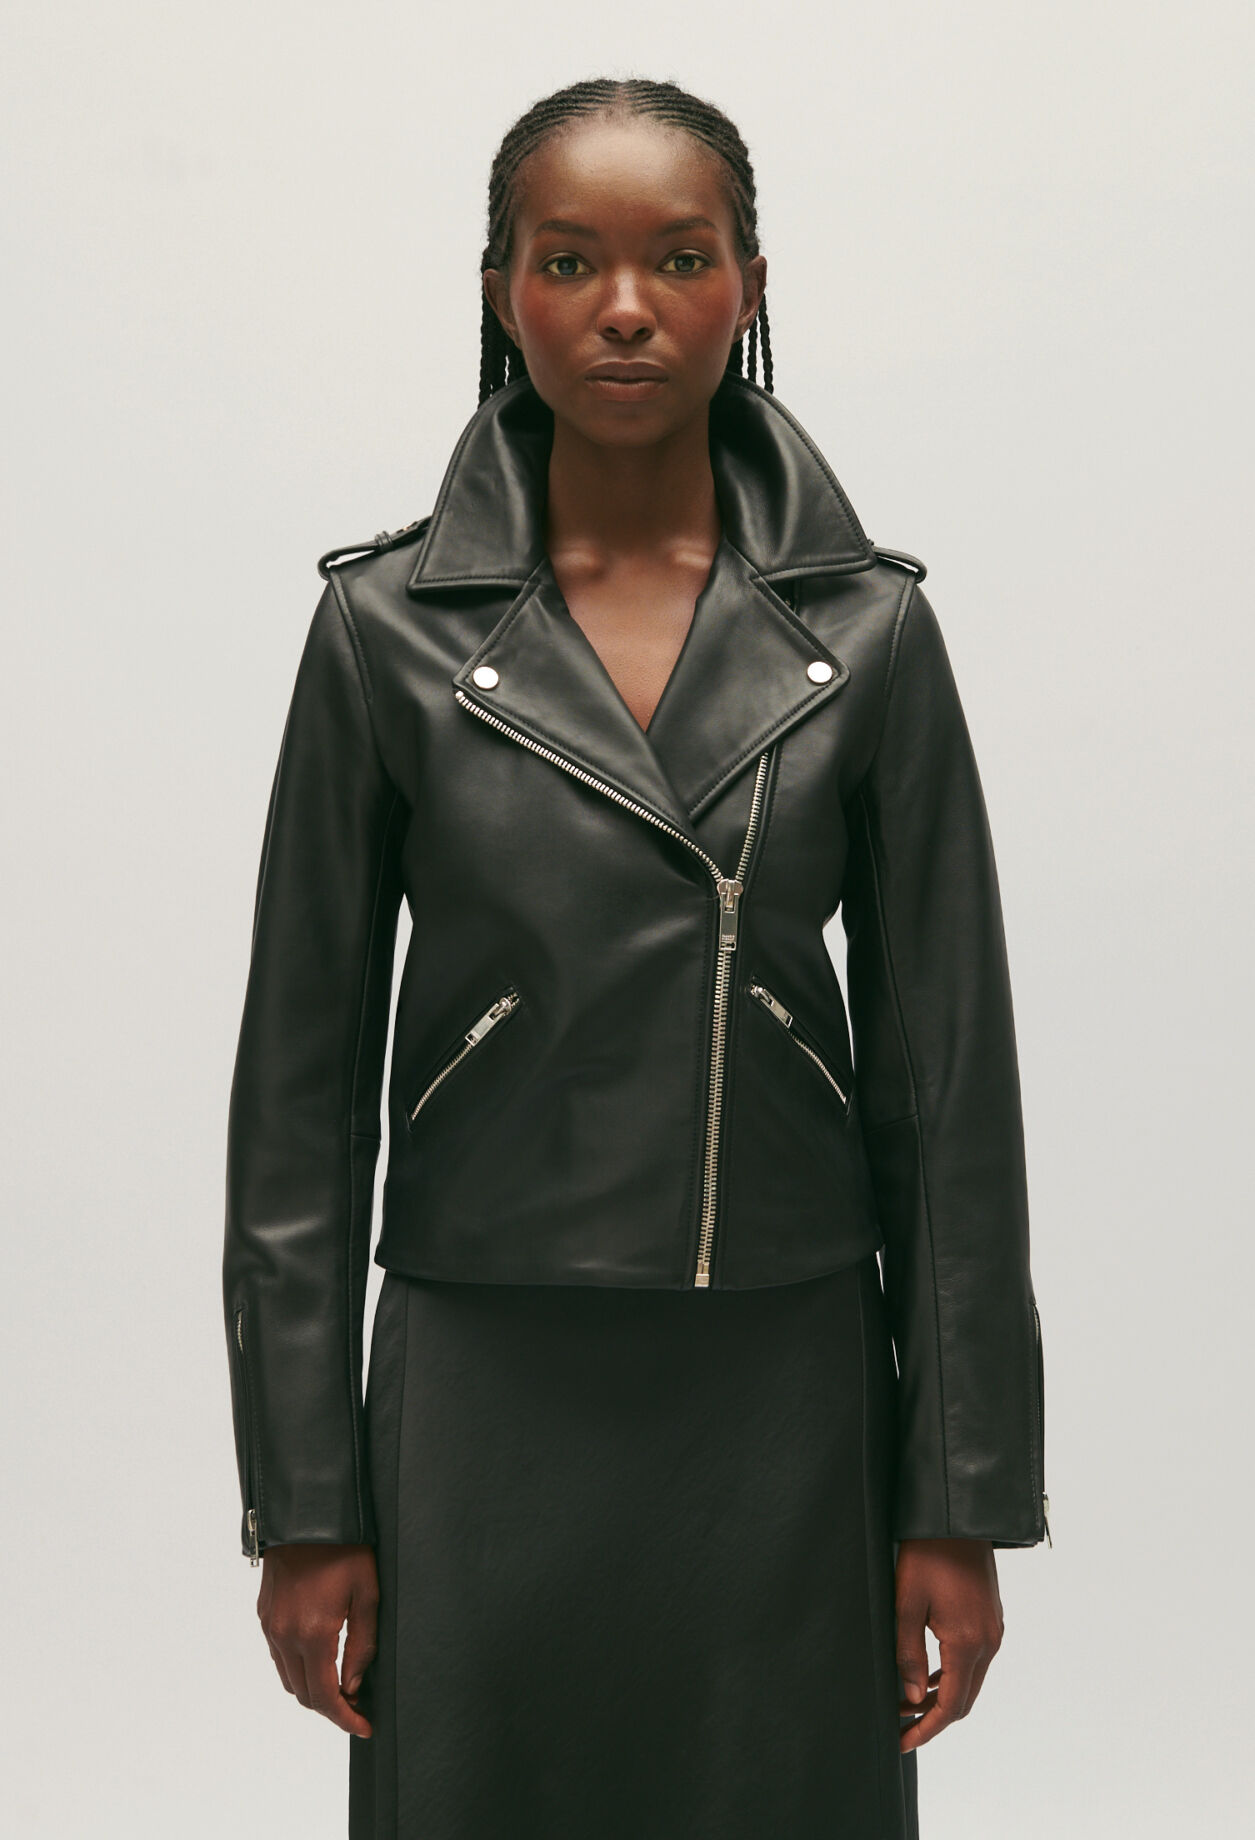 Black smooth leather jacket